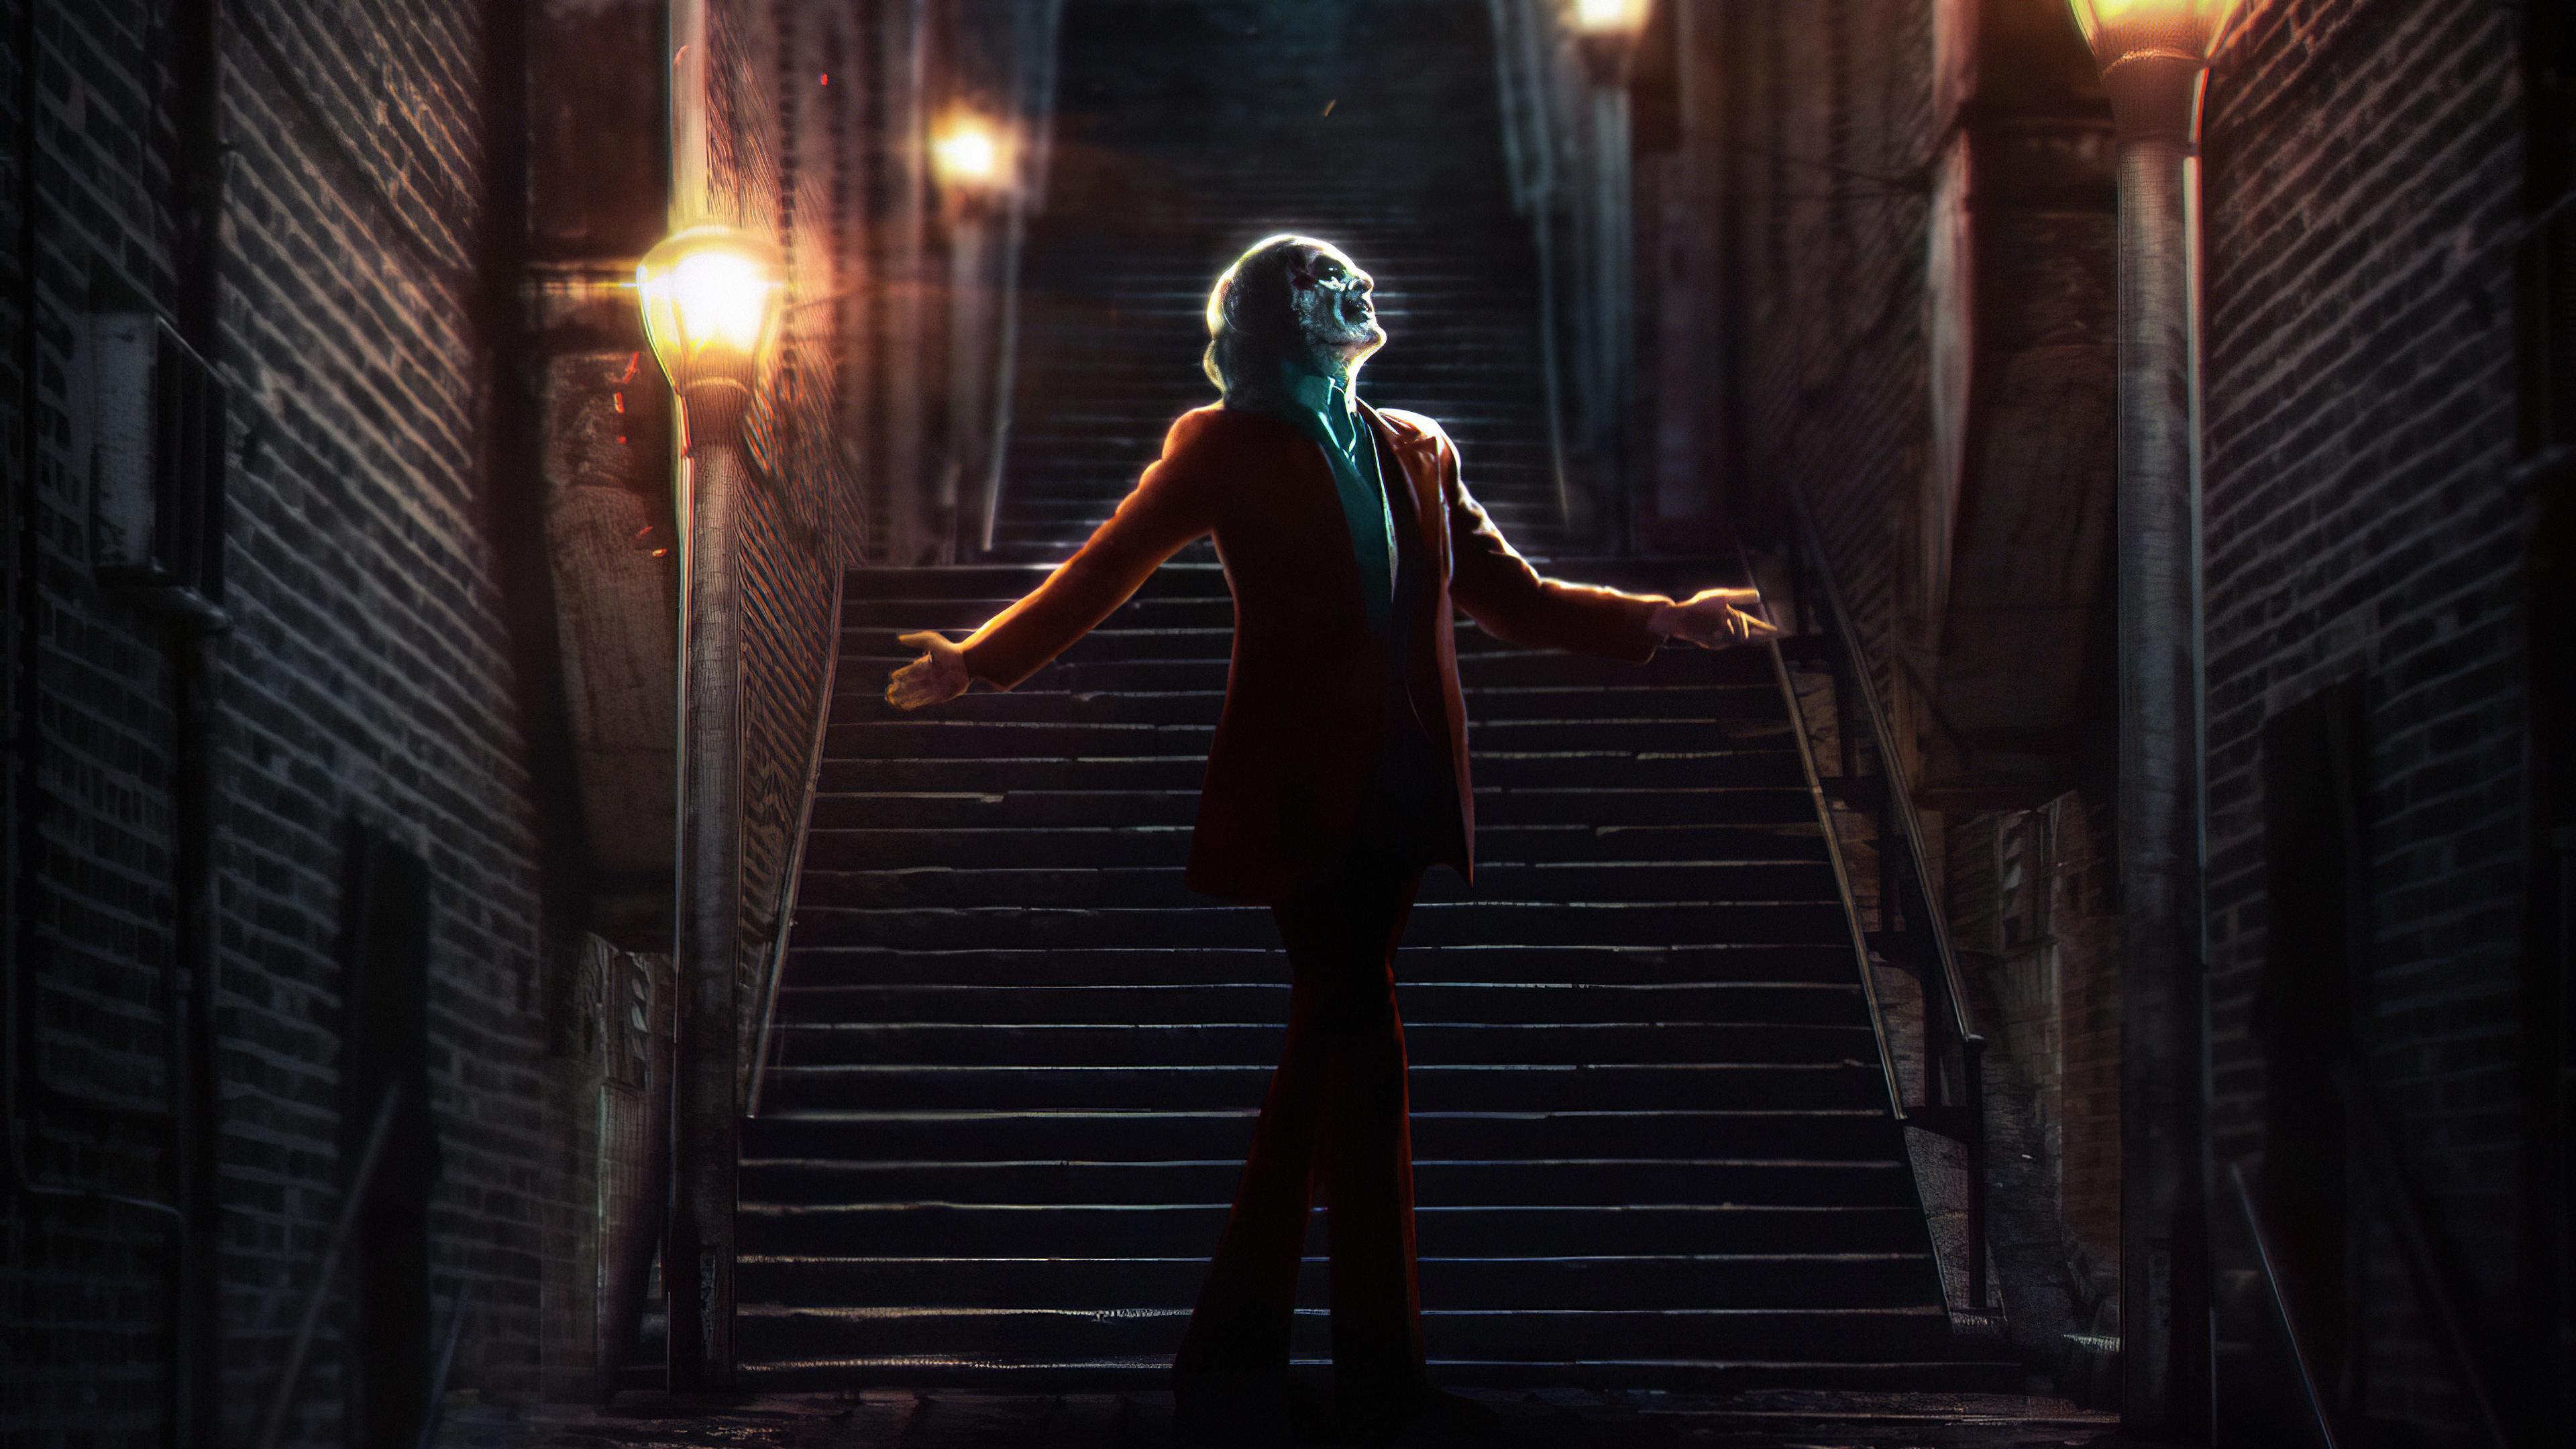 Joker 2019 4k, HD Movies, 4k Wallpaper, Image, Background